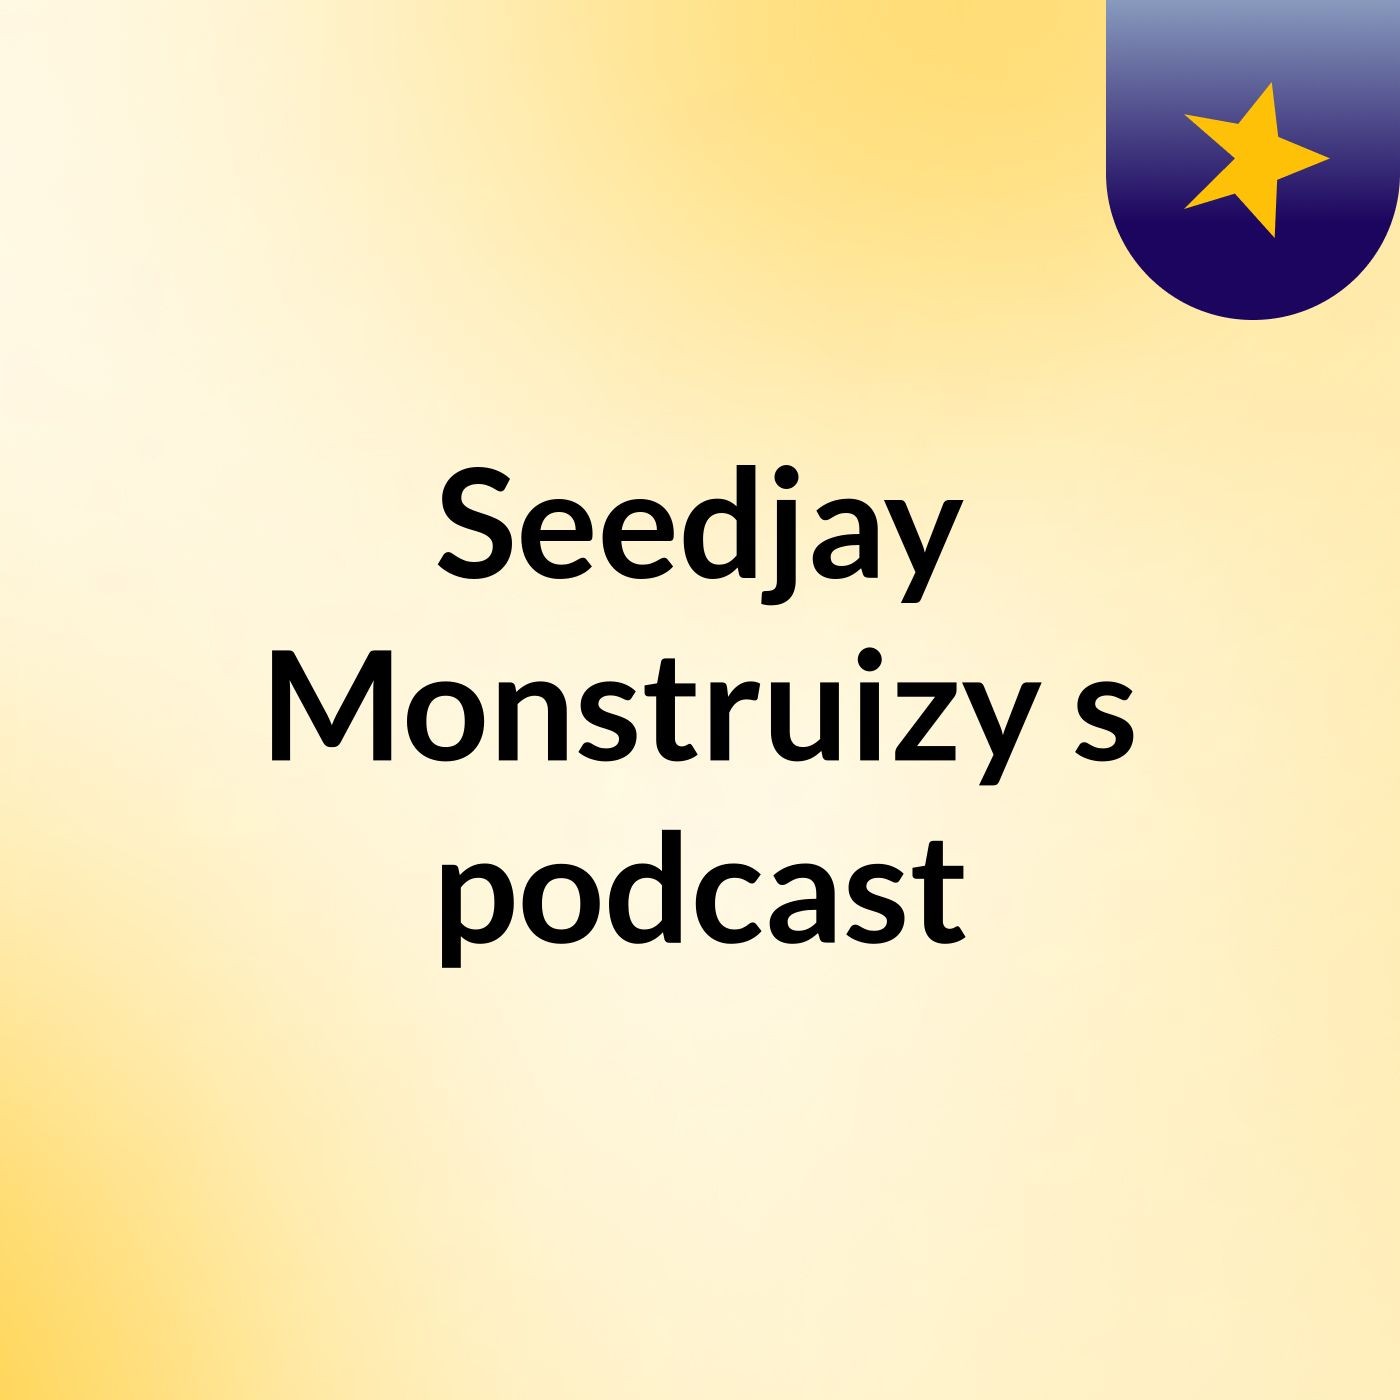 Seedjay Monstruizy's podcast